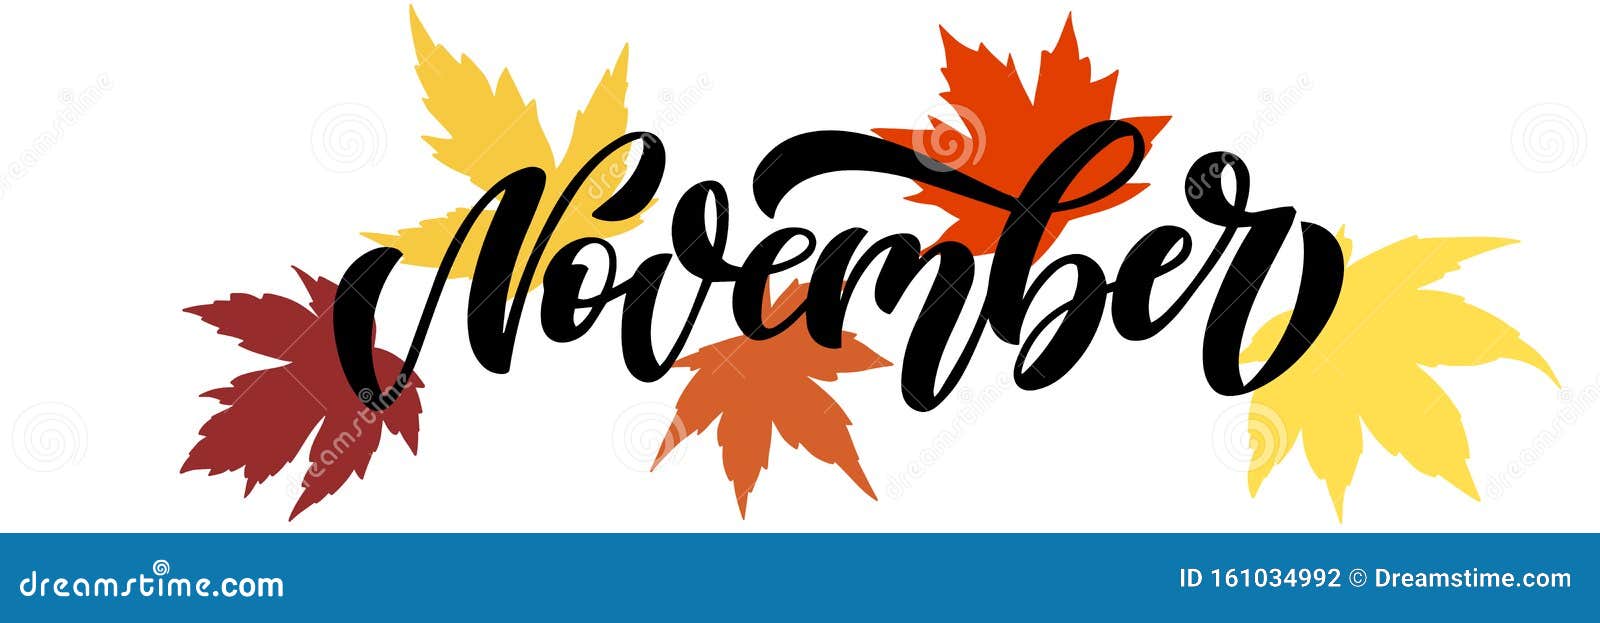 November Sleek Script With Sparse Decorative Maple Leaves Elements